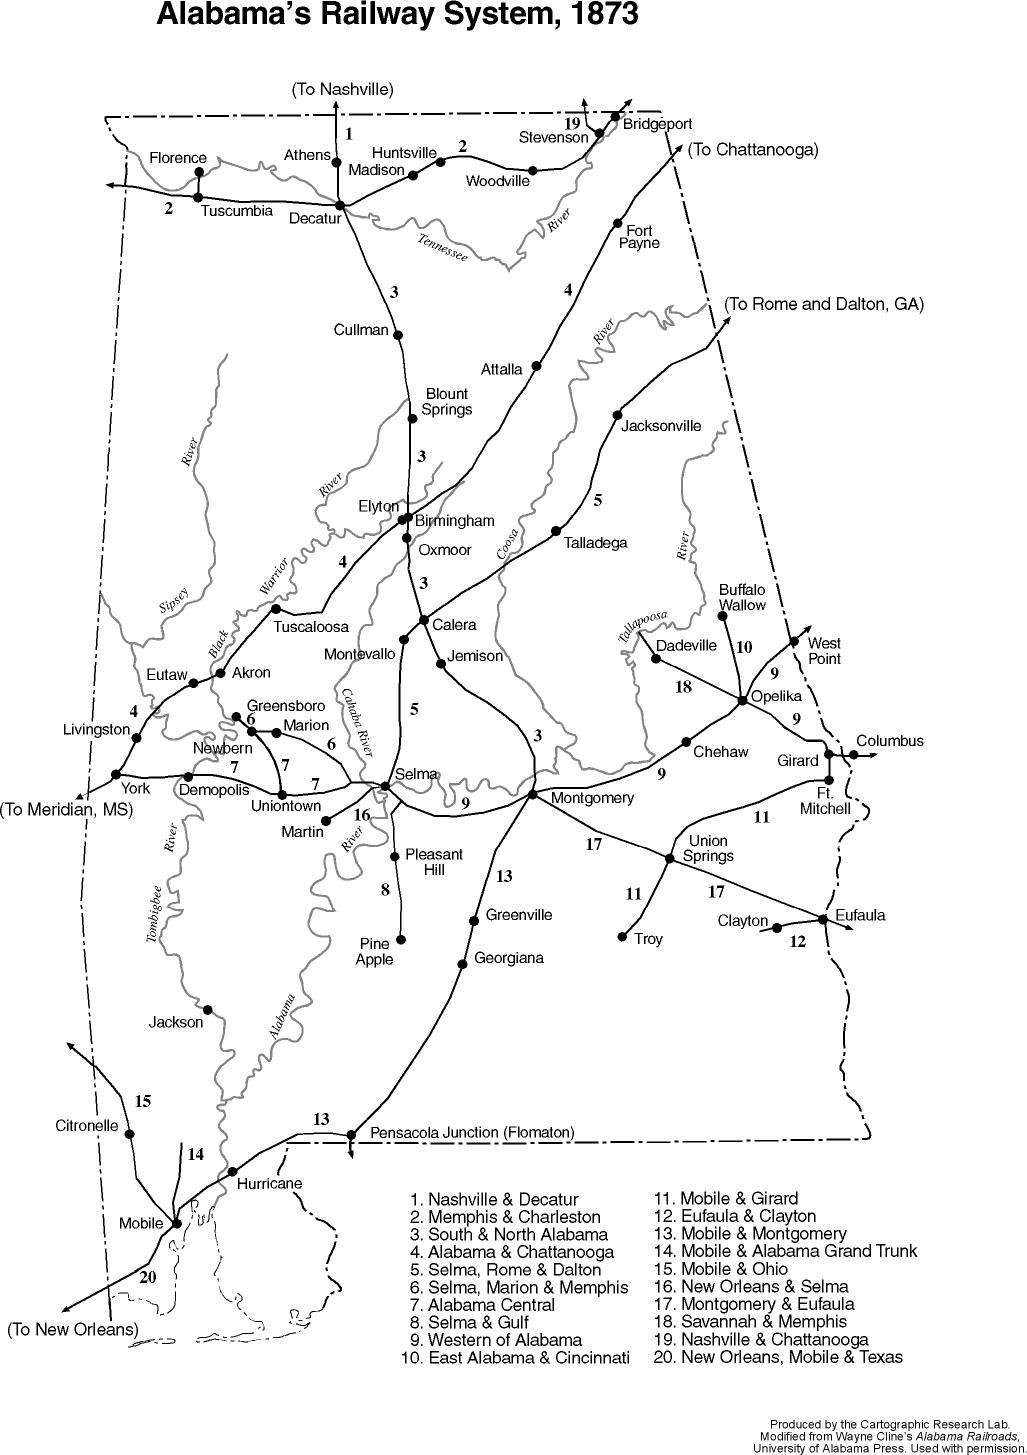 HP 20" x 24" 1867 Map Of Alabama & Tensessee River Rail Road 